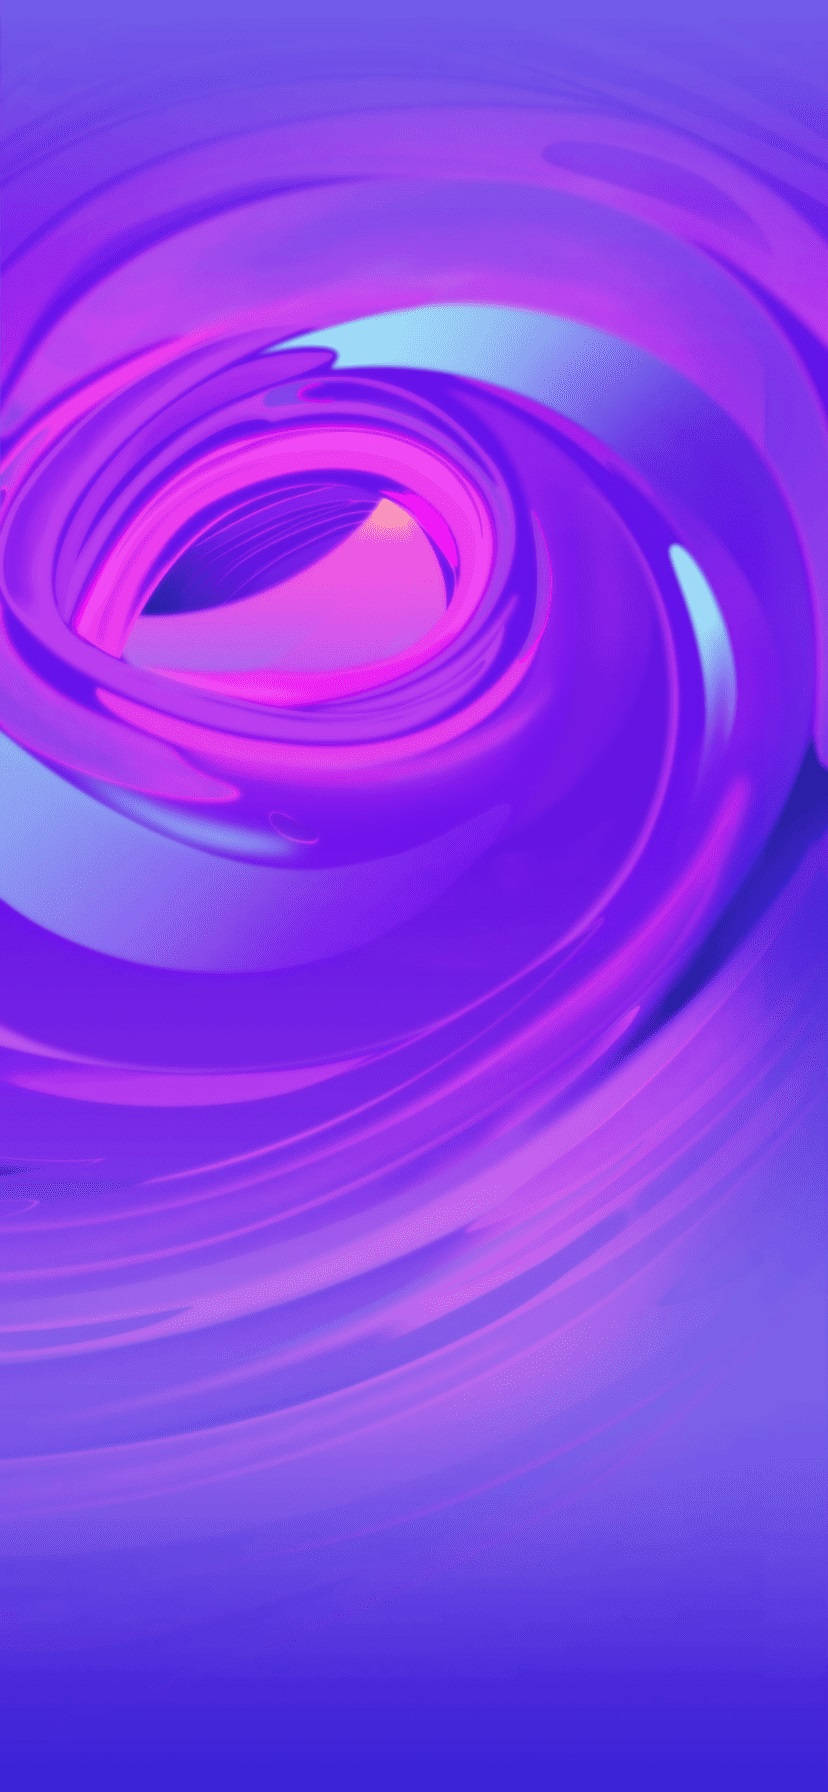 Aesthetic Purple Swirl For Iphone